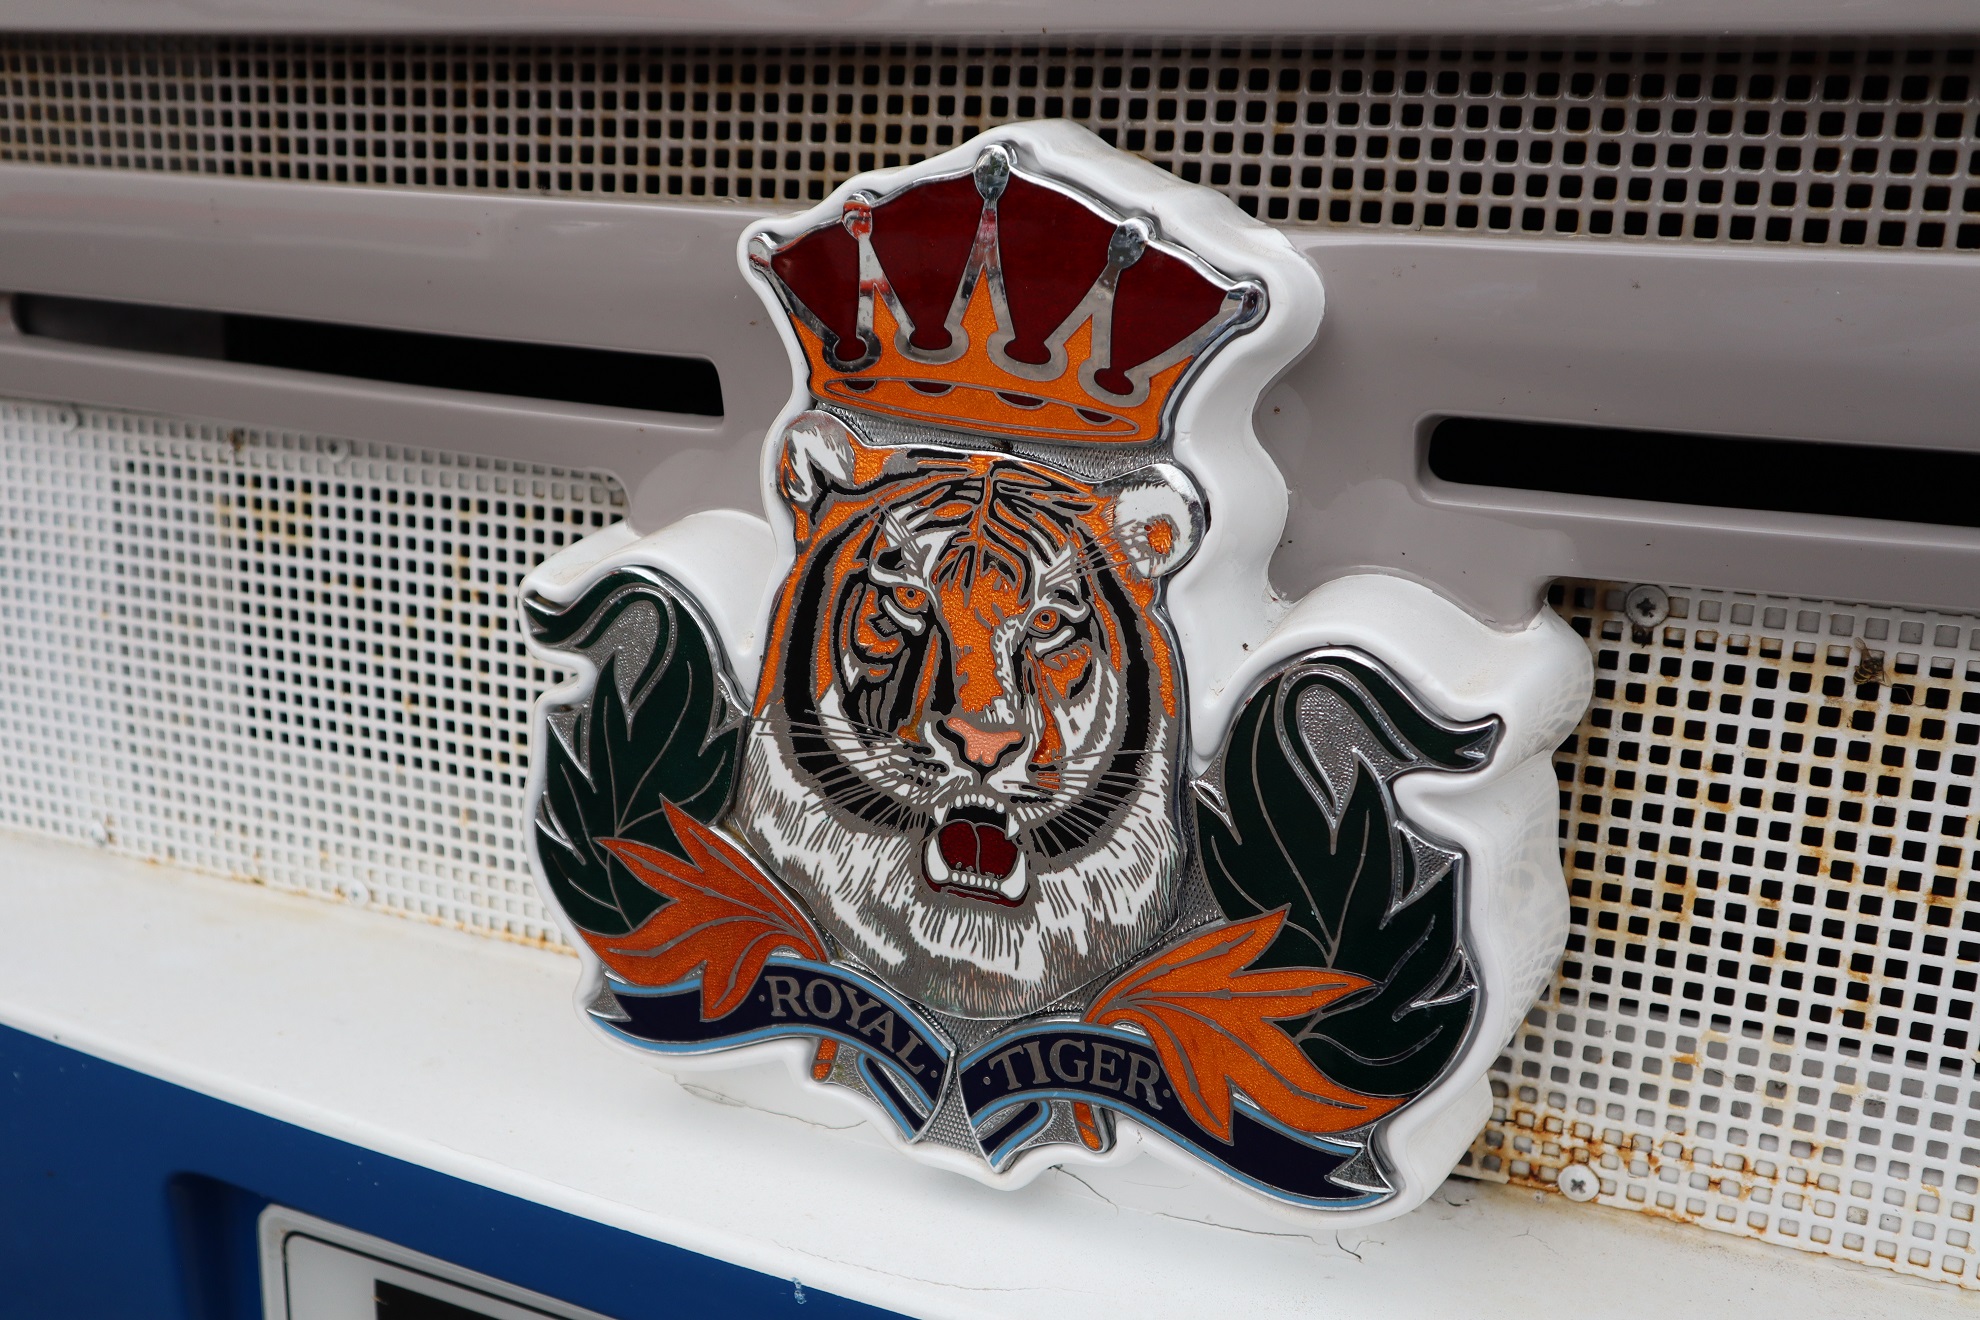 Leyland Royal Tiger badge